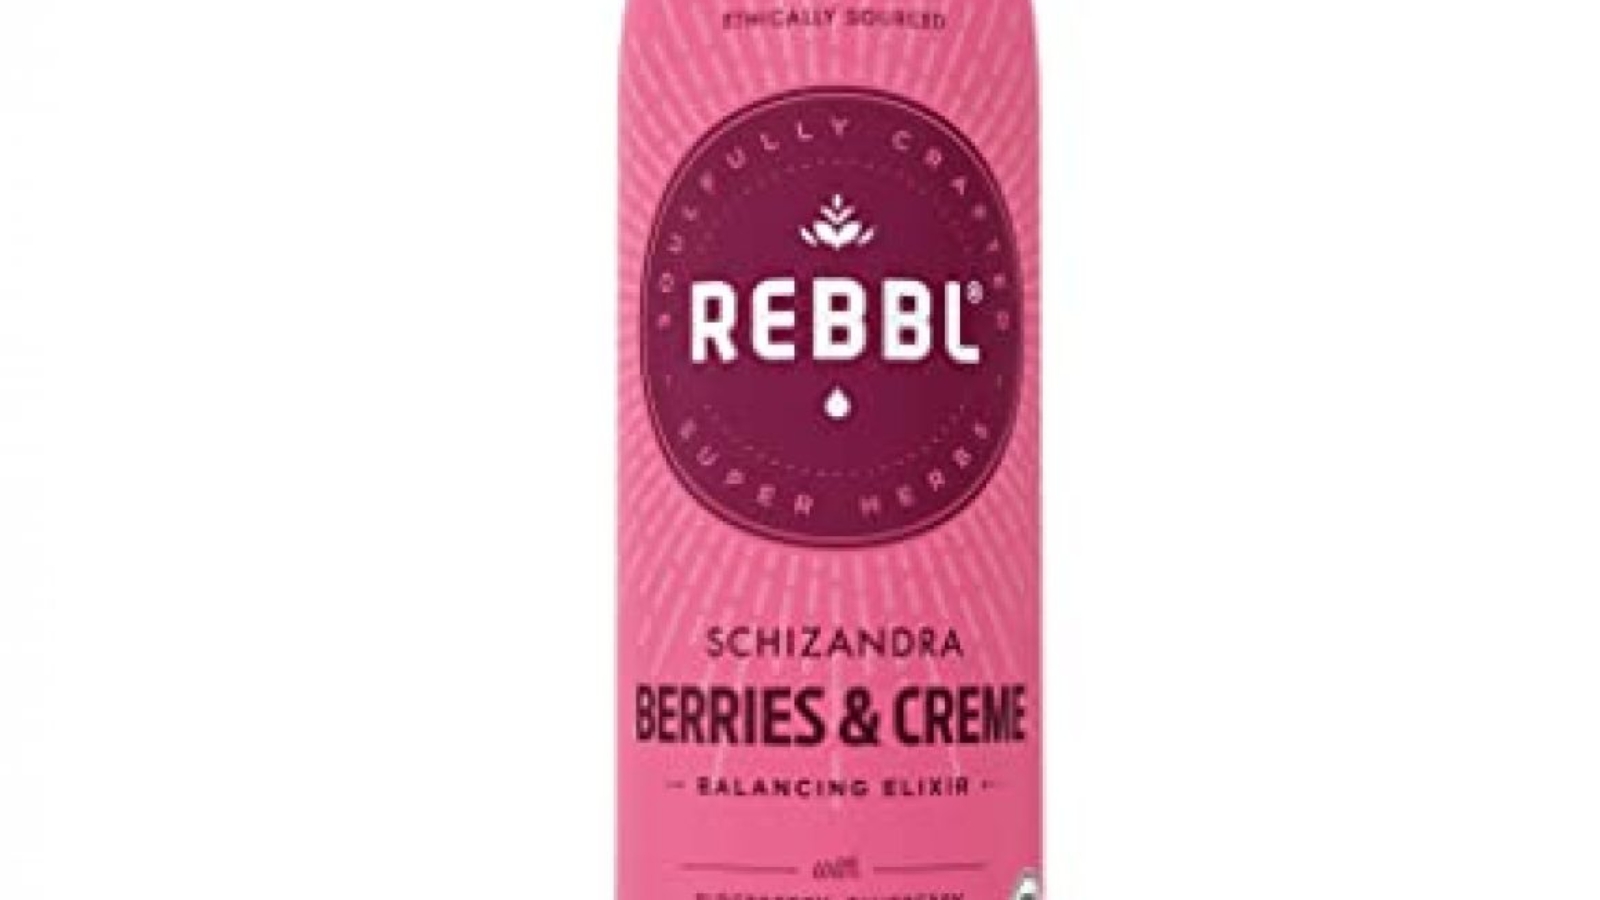 A bottle of REBBL's Shizanadra Berries & Creme health drink.